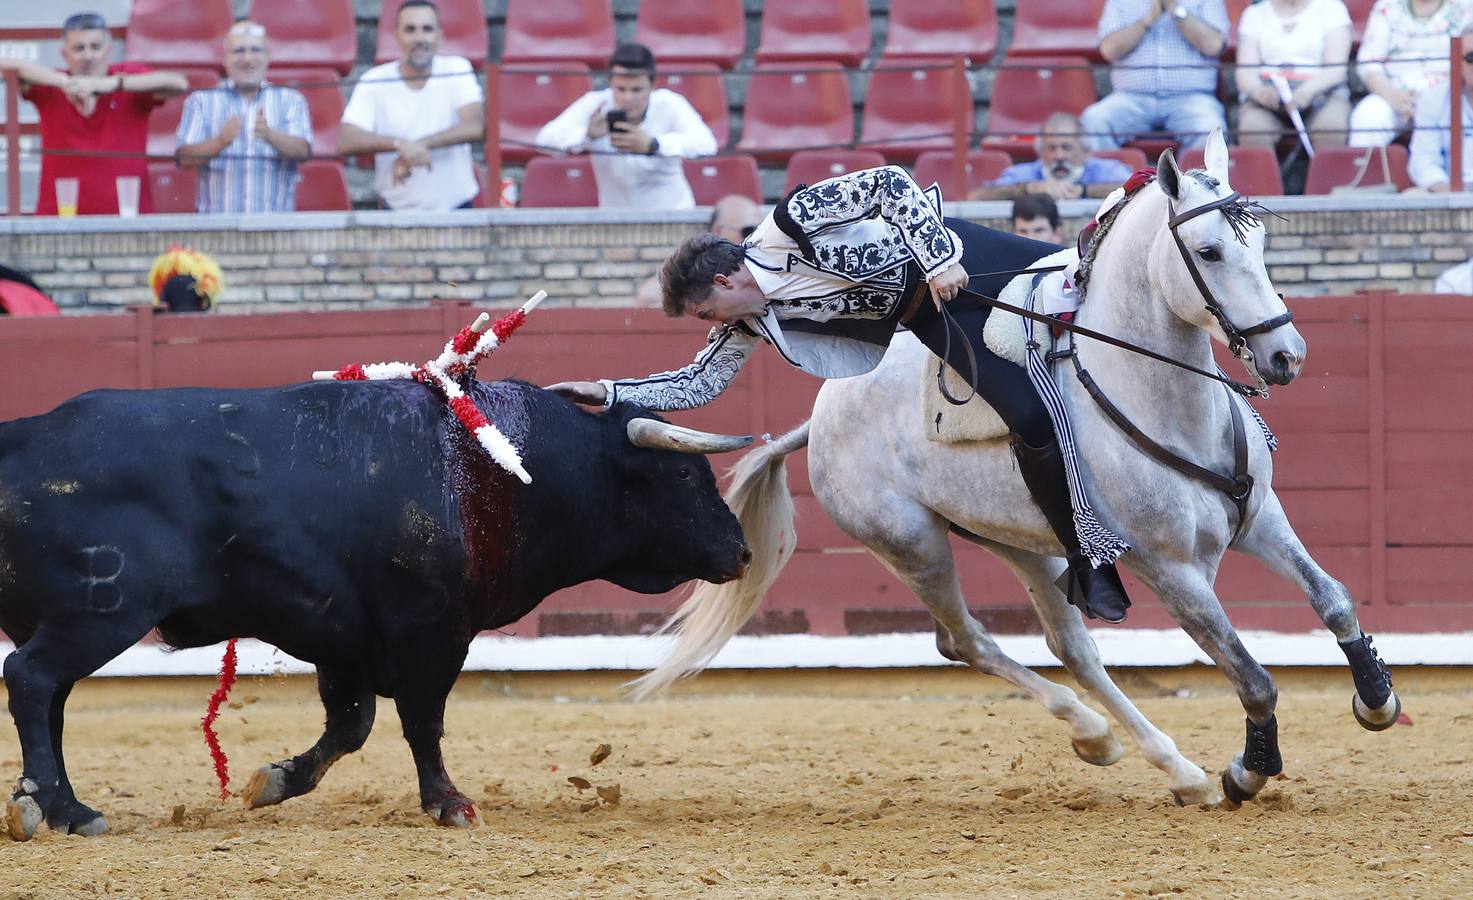 La corrida de rejones de Córdoba, en imágenes